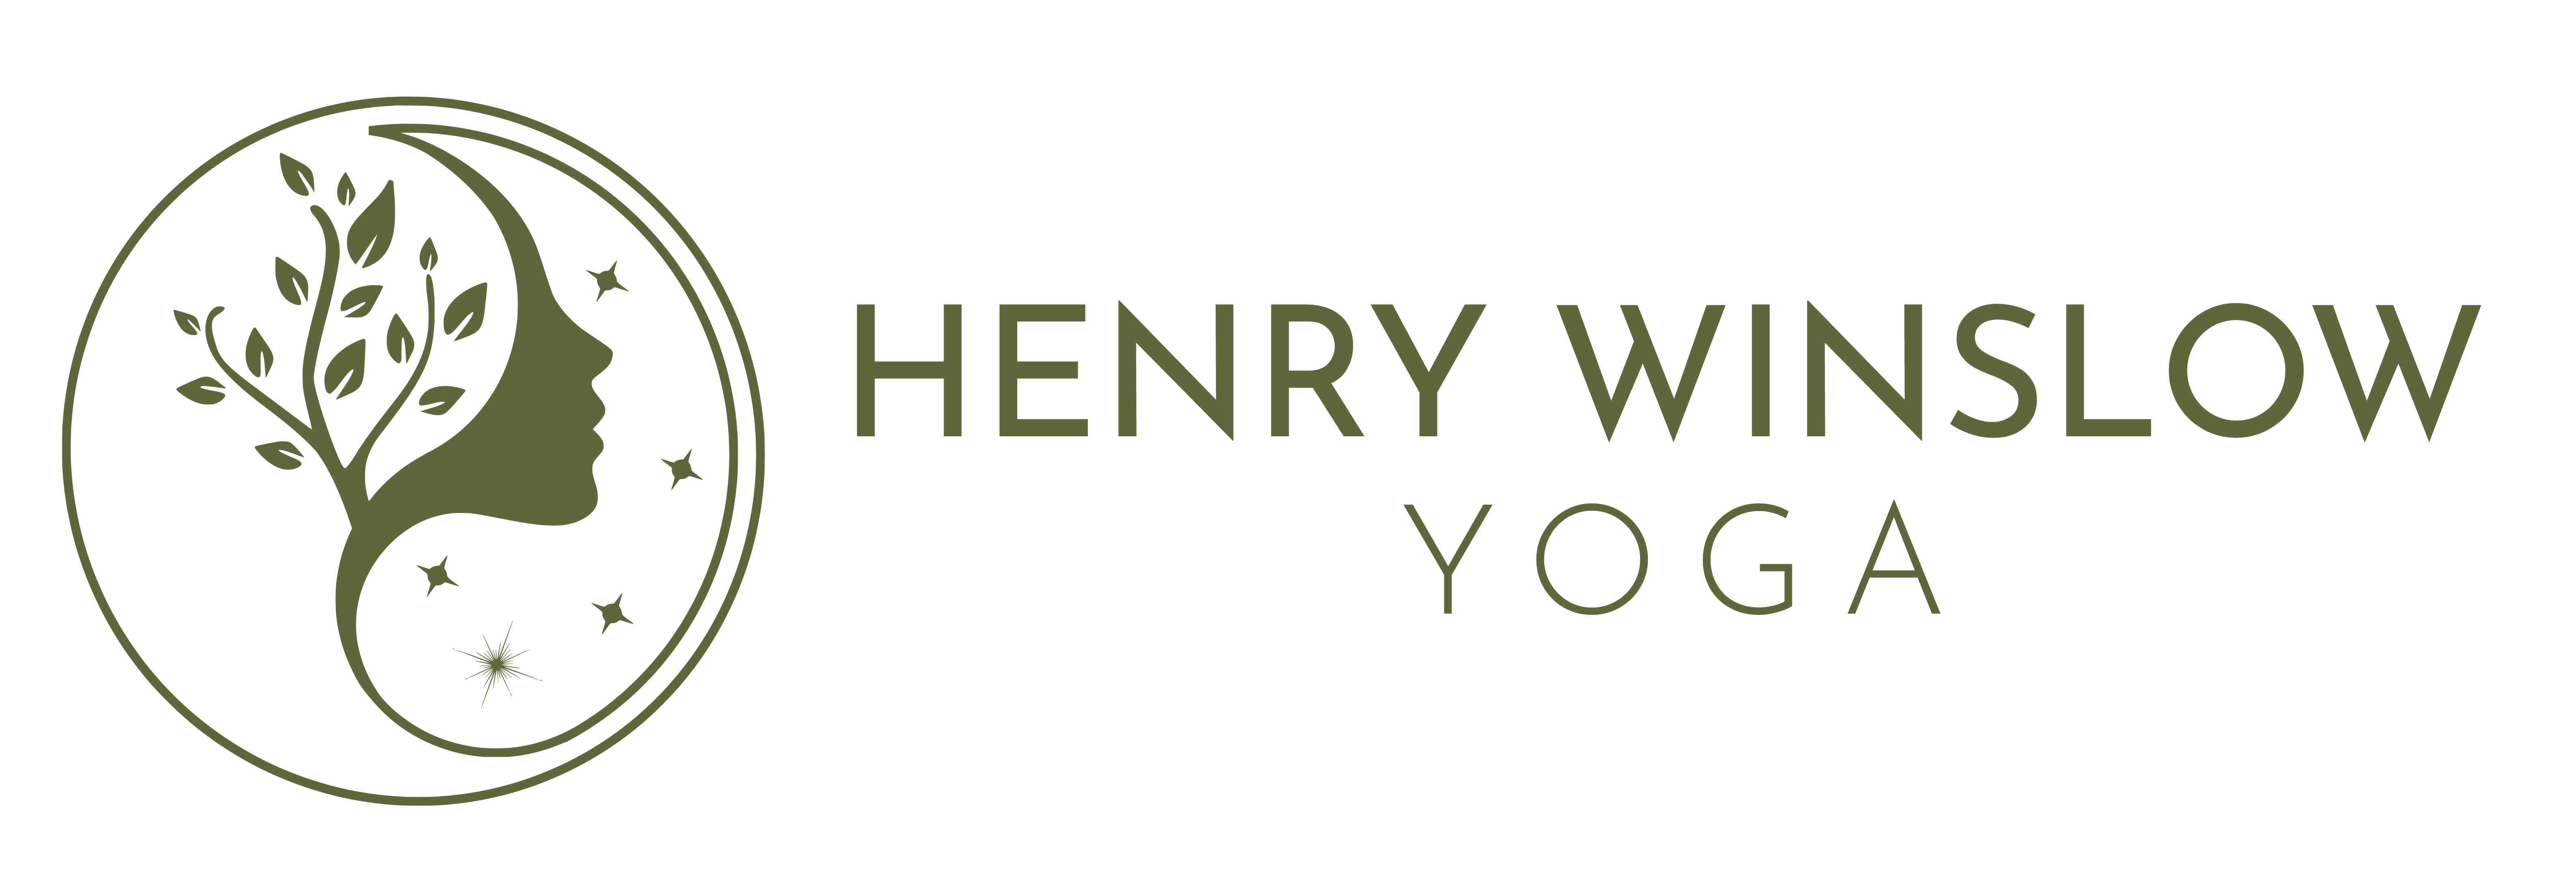 Henry Winslow Yoga logo